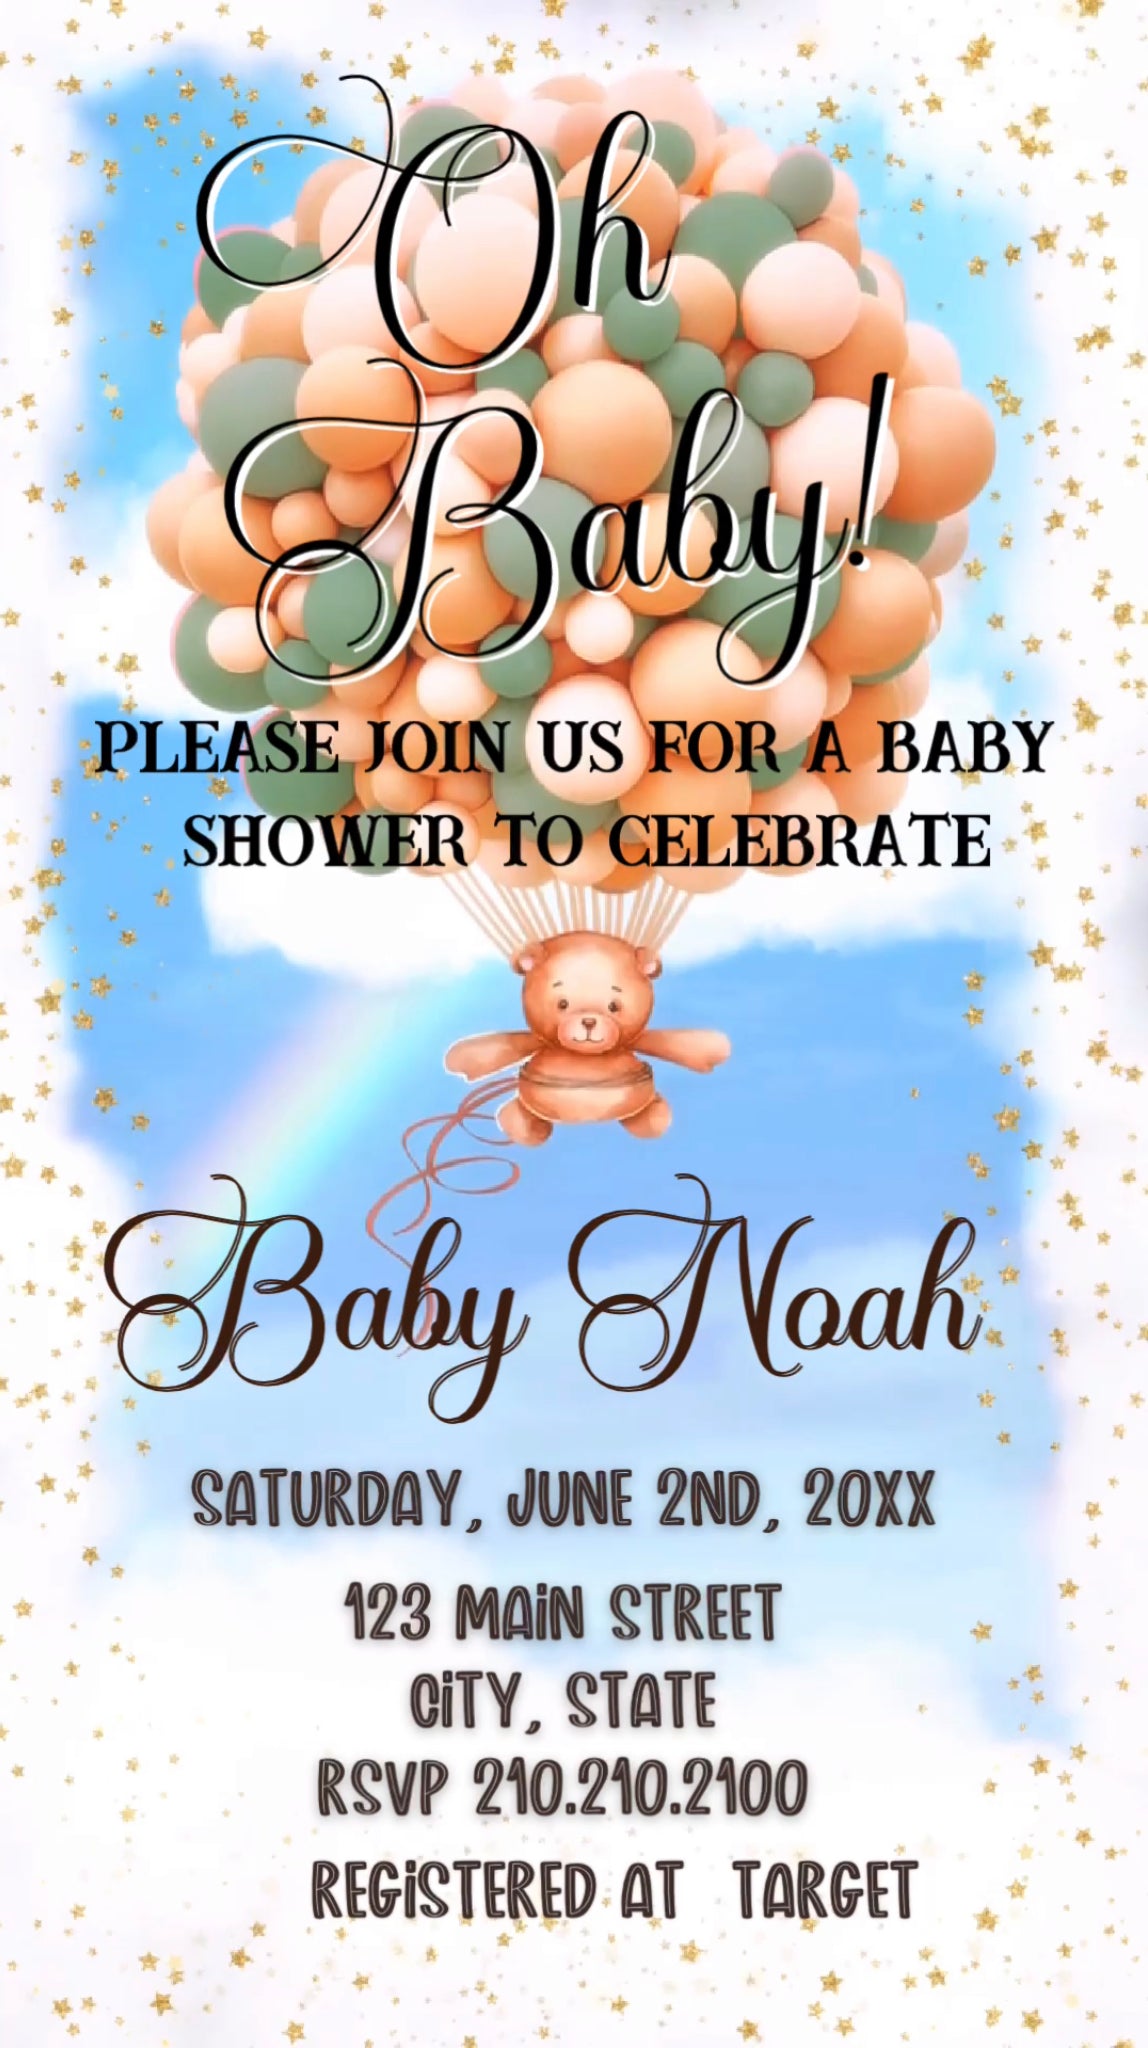 Green balloons Baby Shower Video Invite